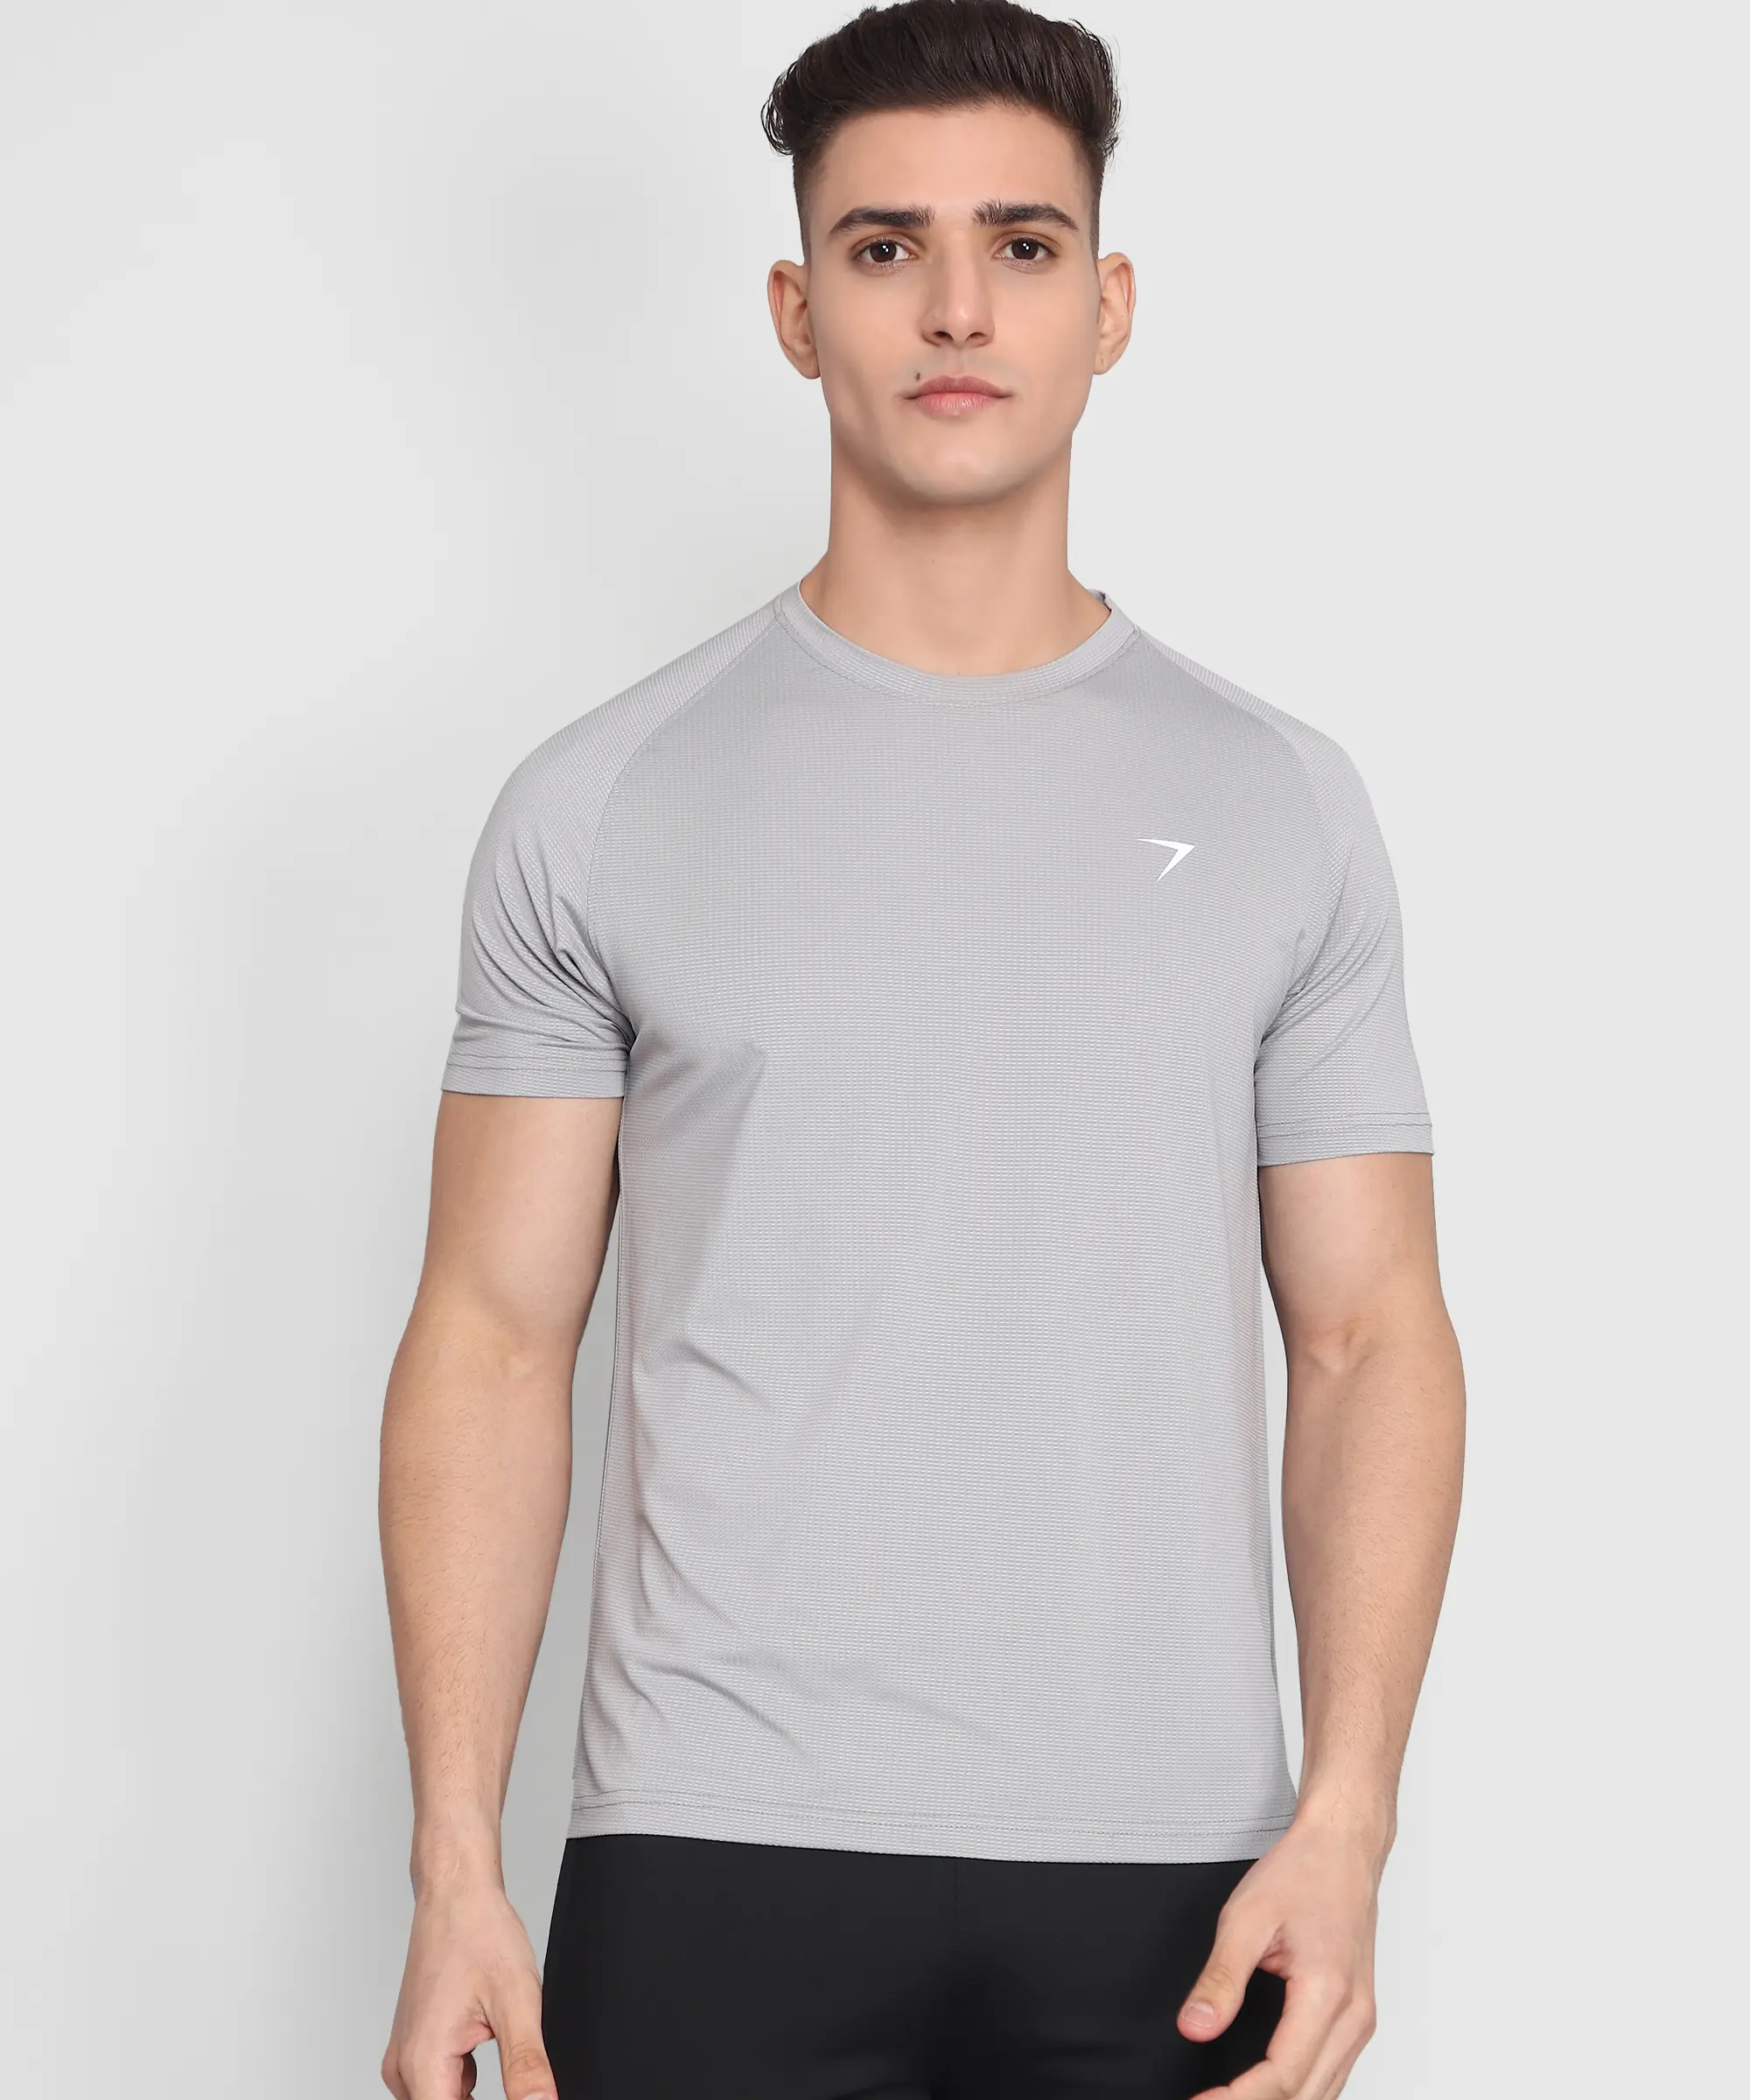 JoggerSports Air Cool T-Shirt Grey